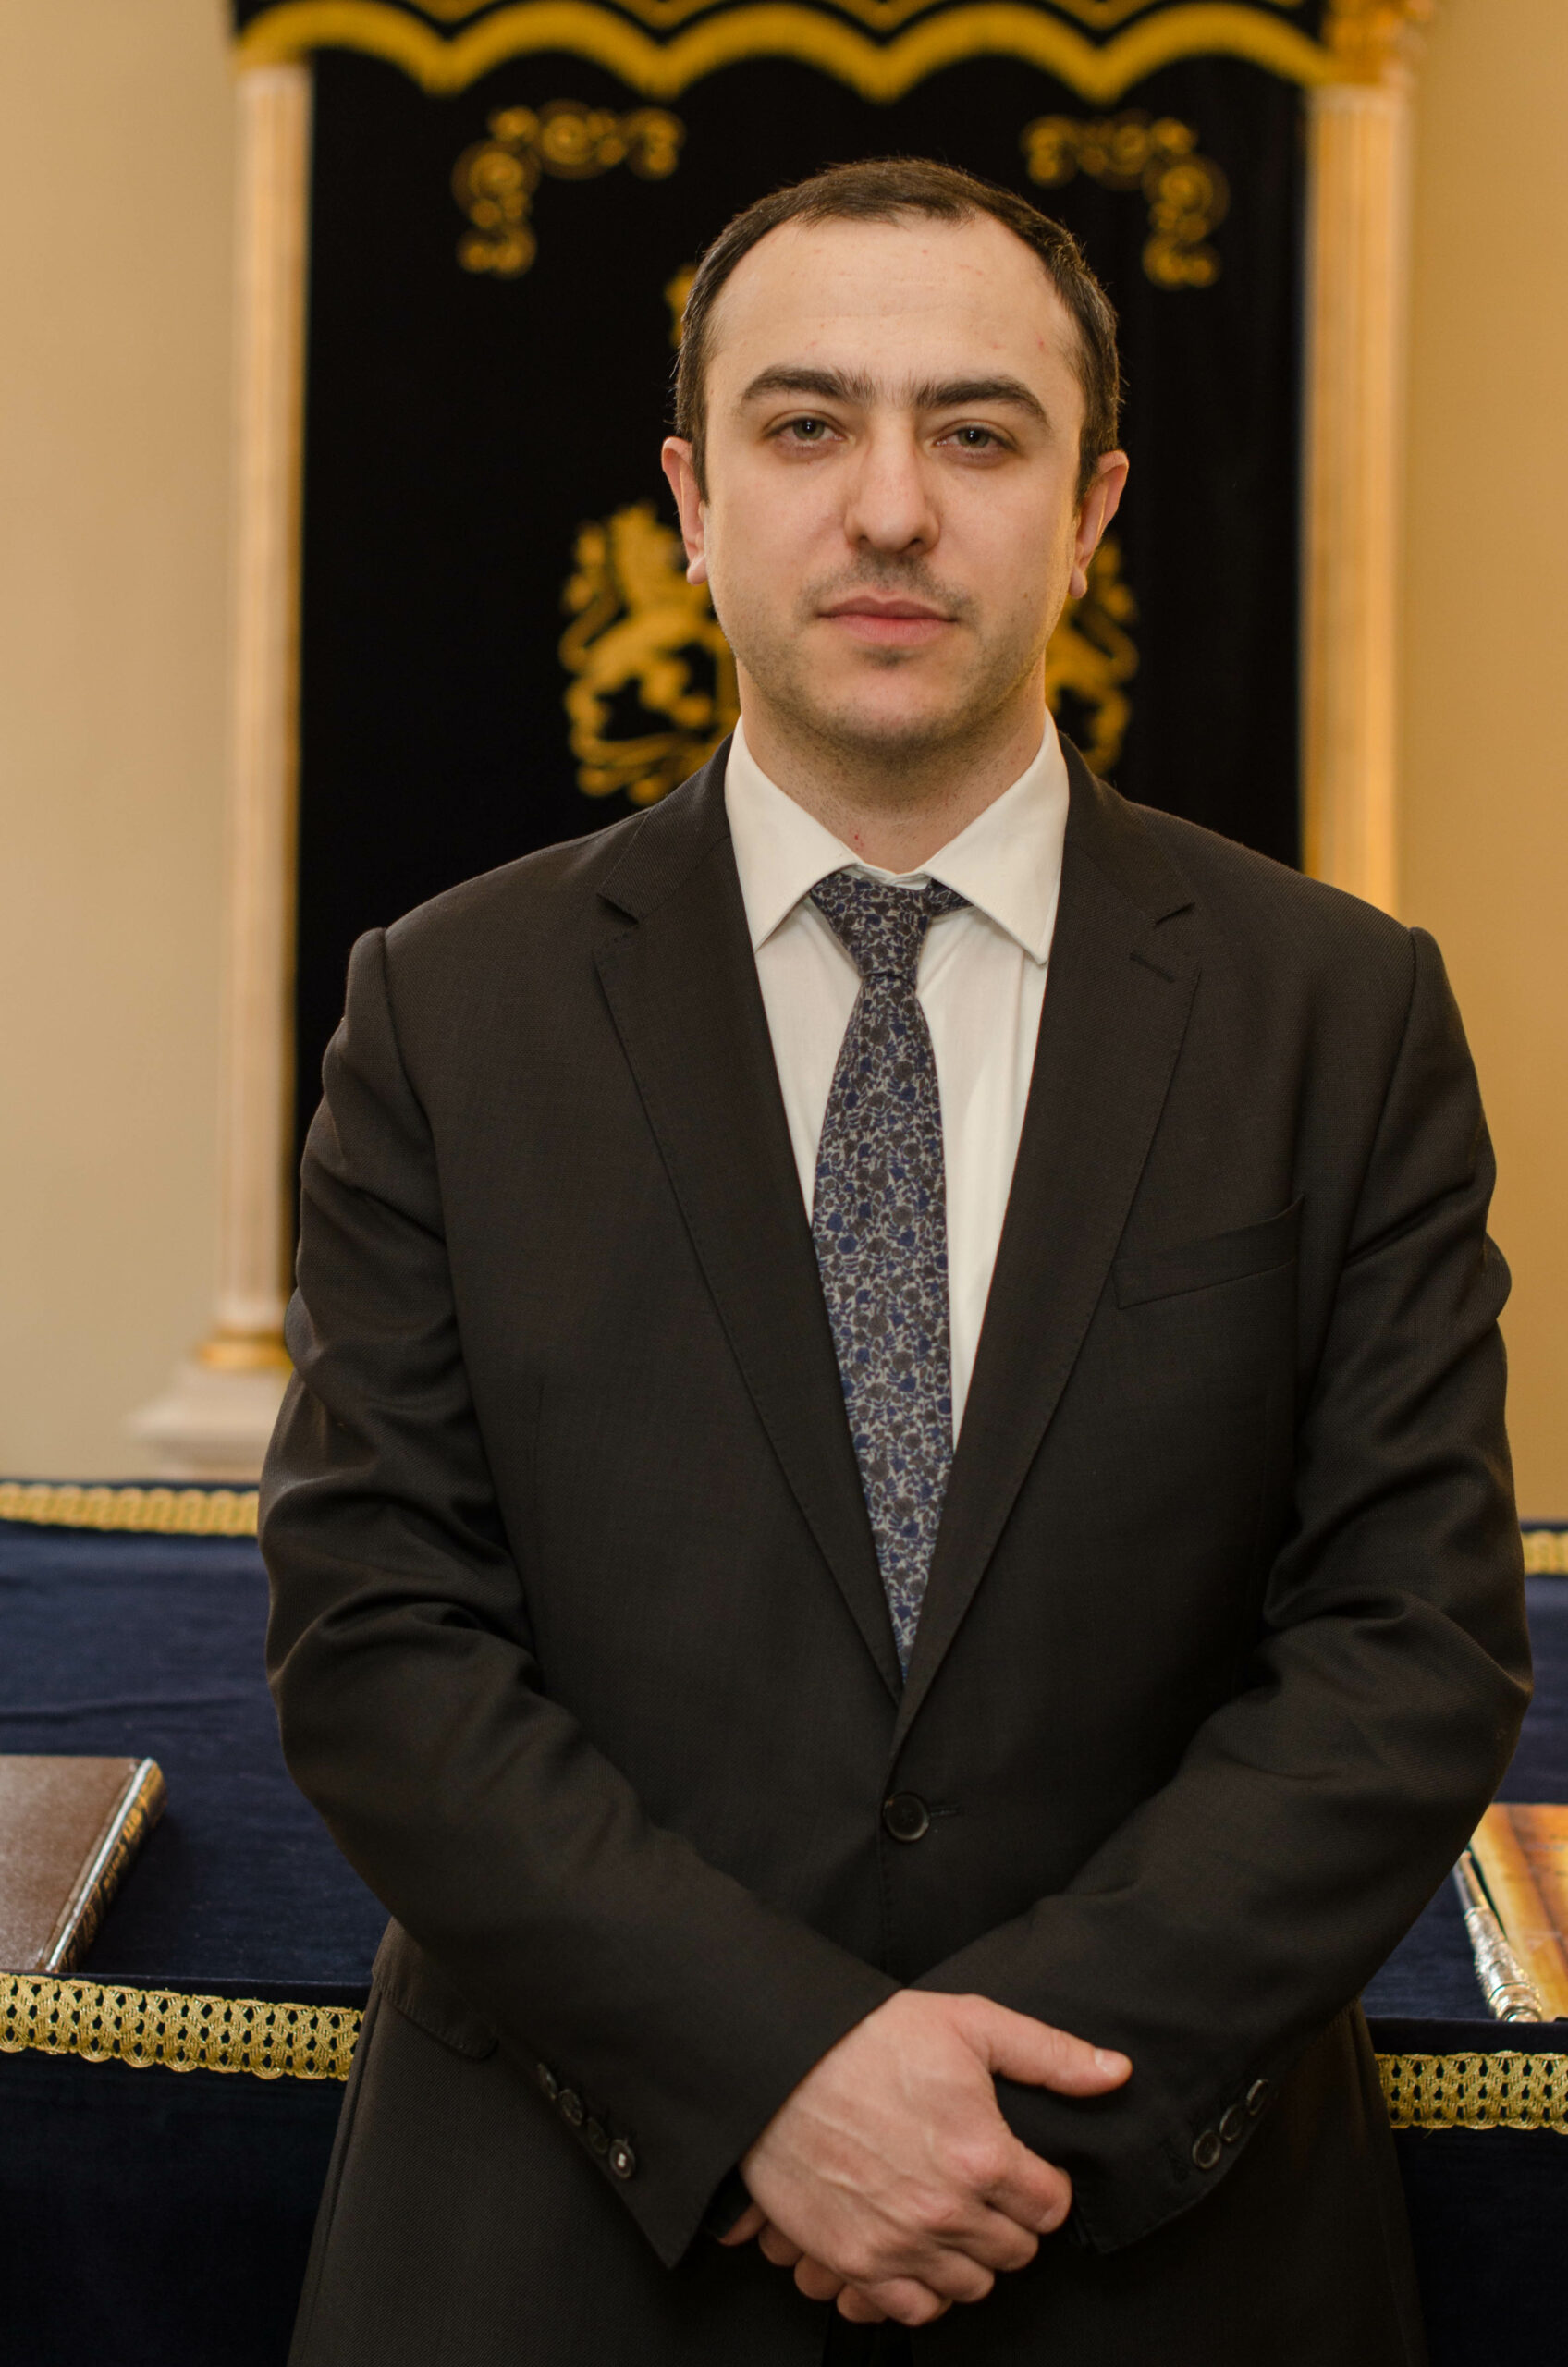 Rabbiner David Zharko